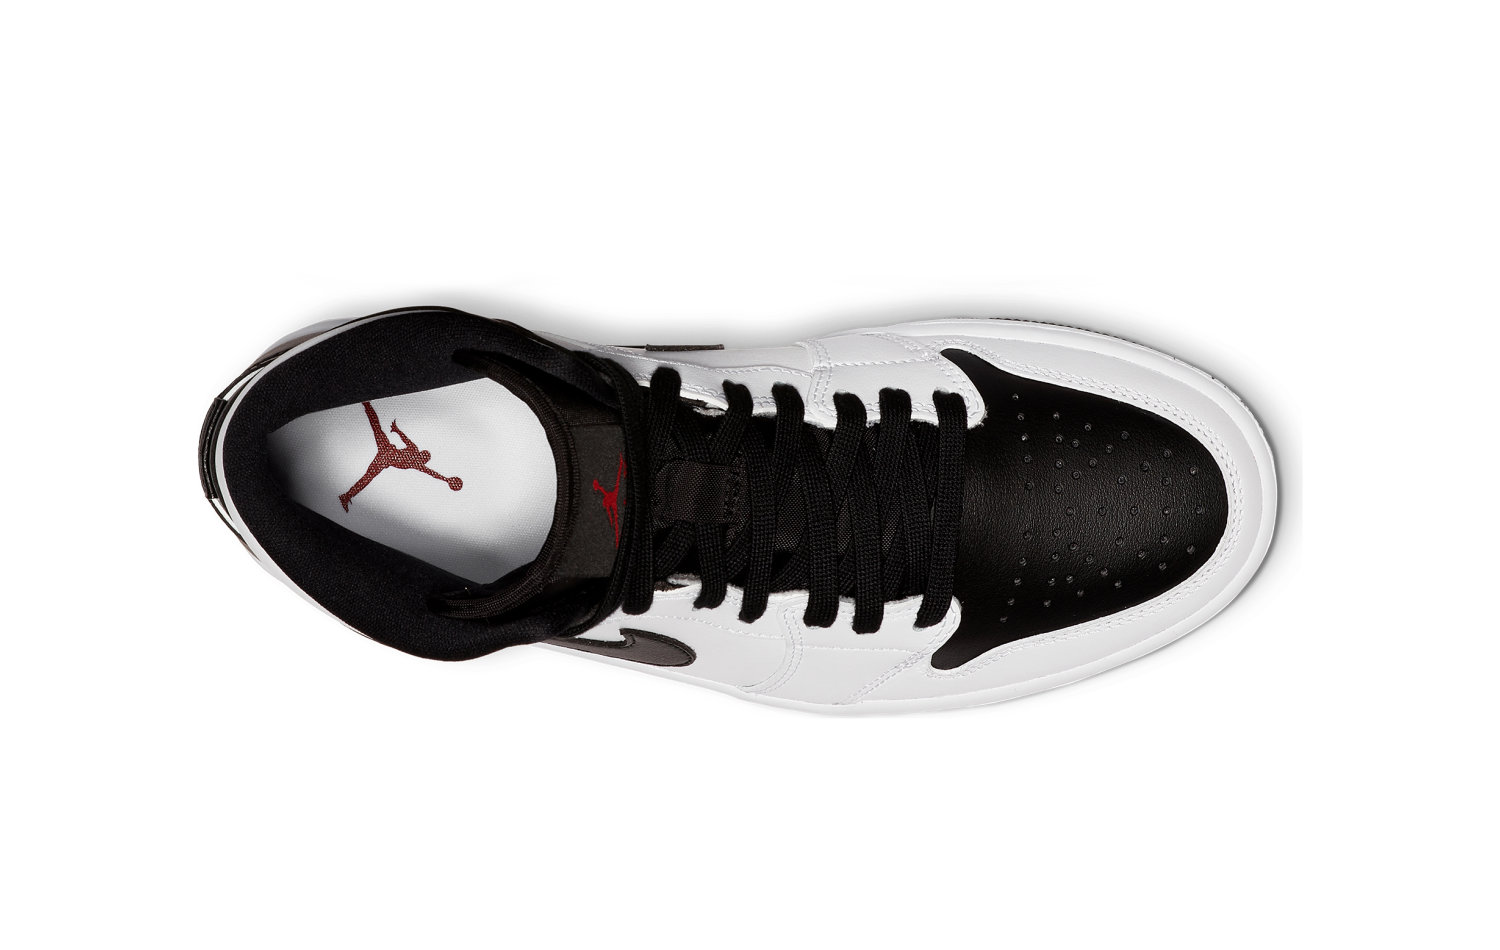 Jordan Wmns Air Jordan 1 Mid, White/Gym Red-Black női cipő eladó, ár